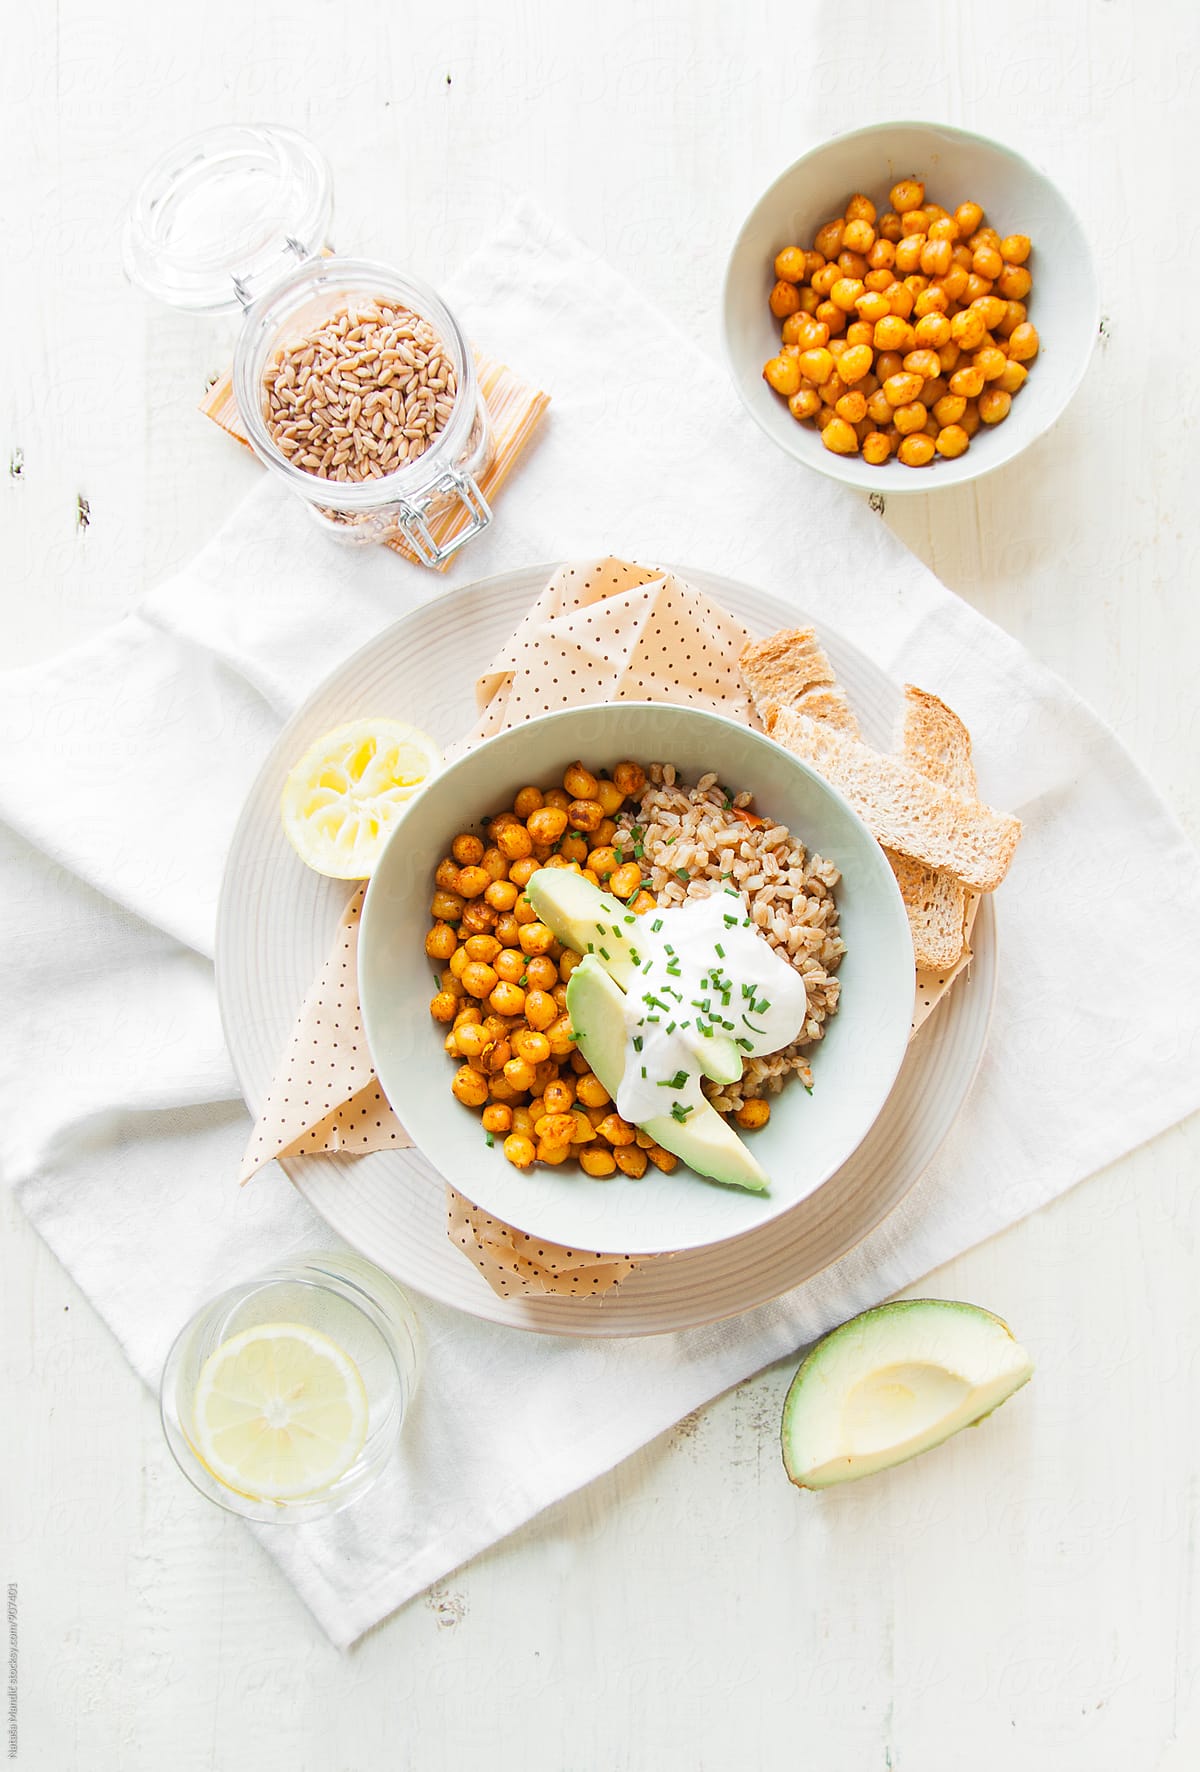 Spelt, chickpeas and avocado bowl with yogurt sauce